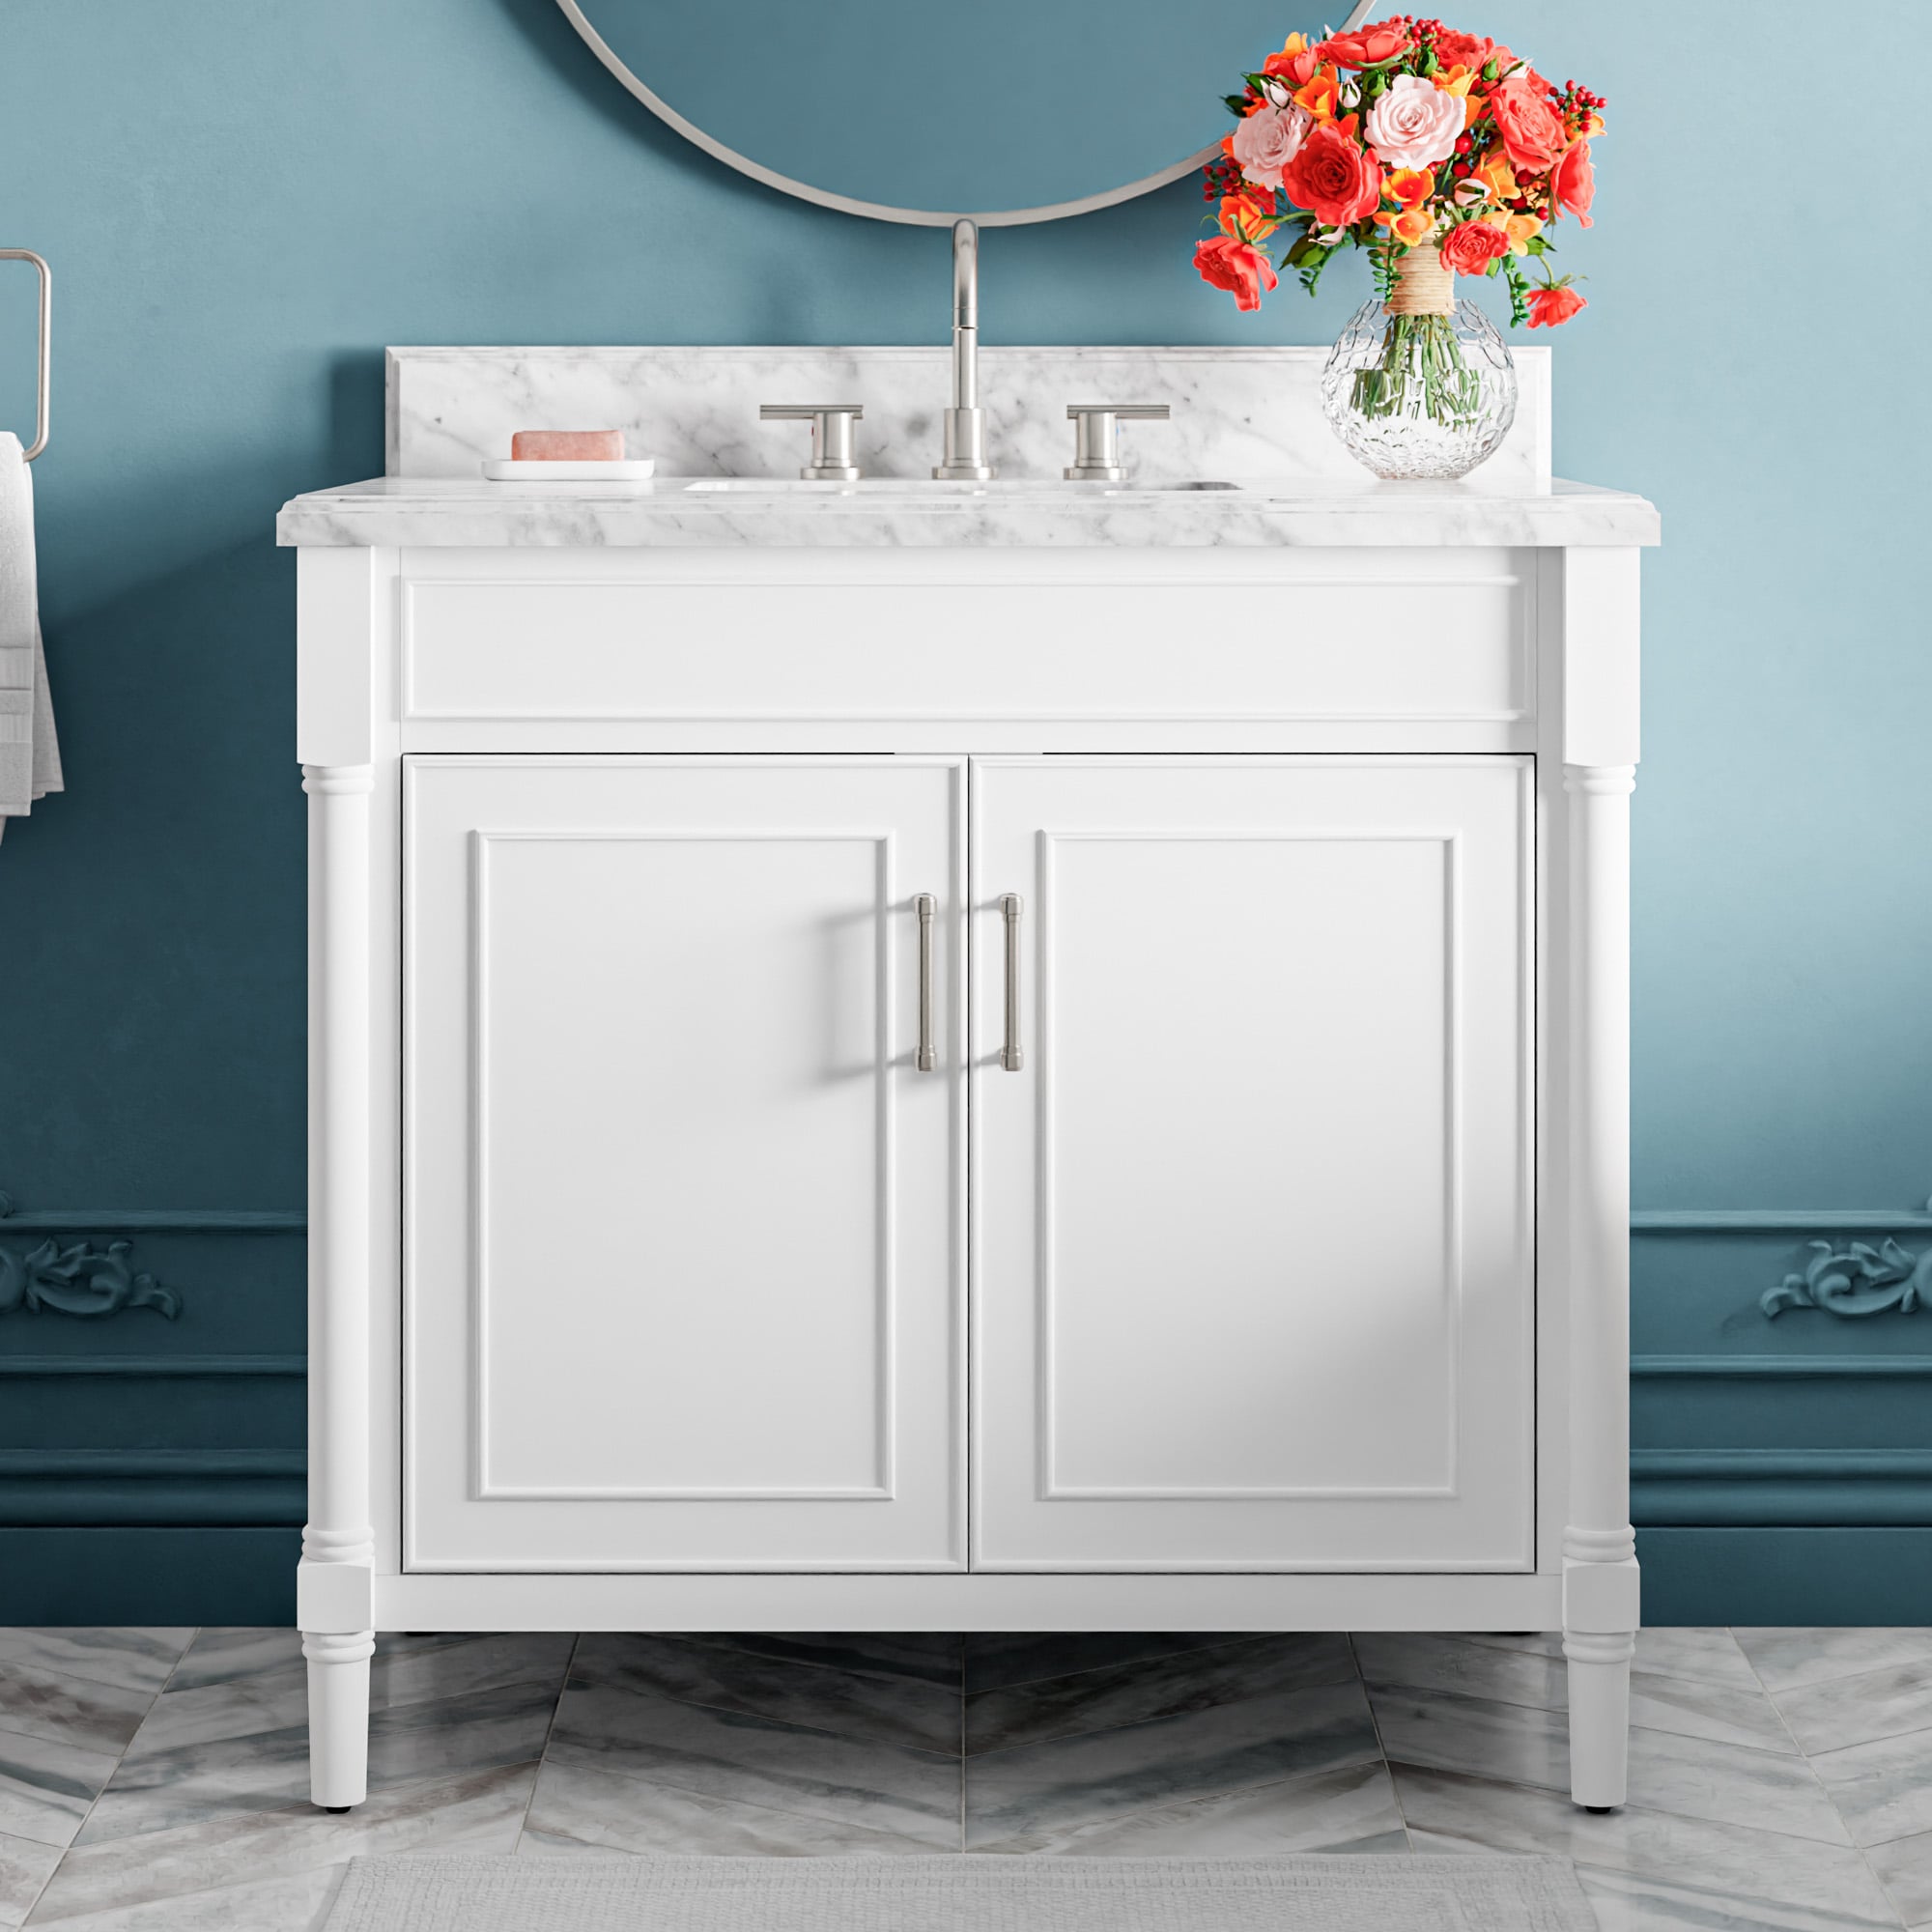 Perrella 37-in White Undermount Single Sink Bathroom Vanity with Carrara Natural Marble Top | - allen + roth 2543VA-37-342-900L